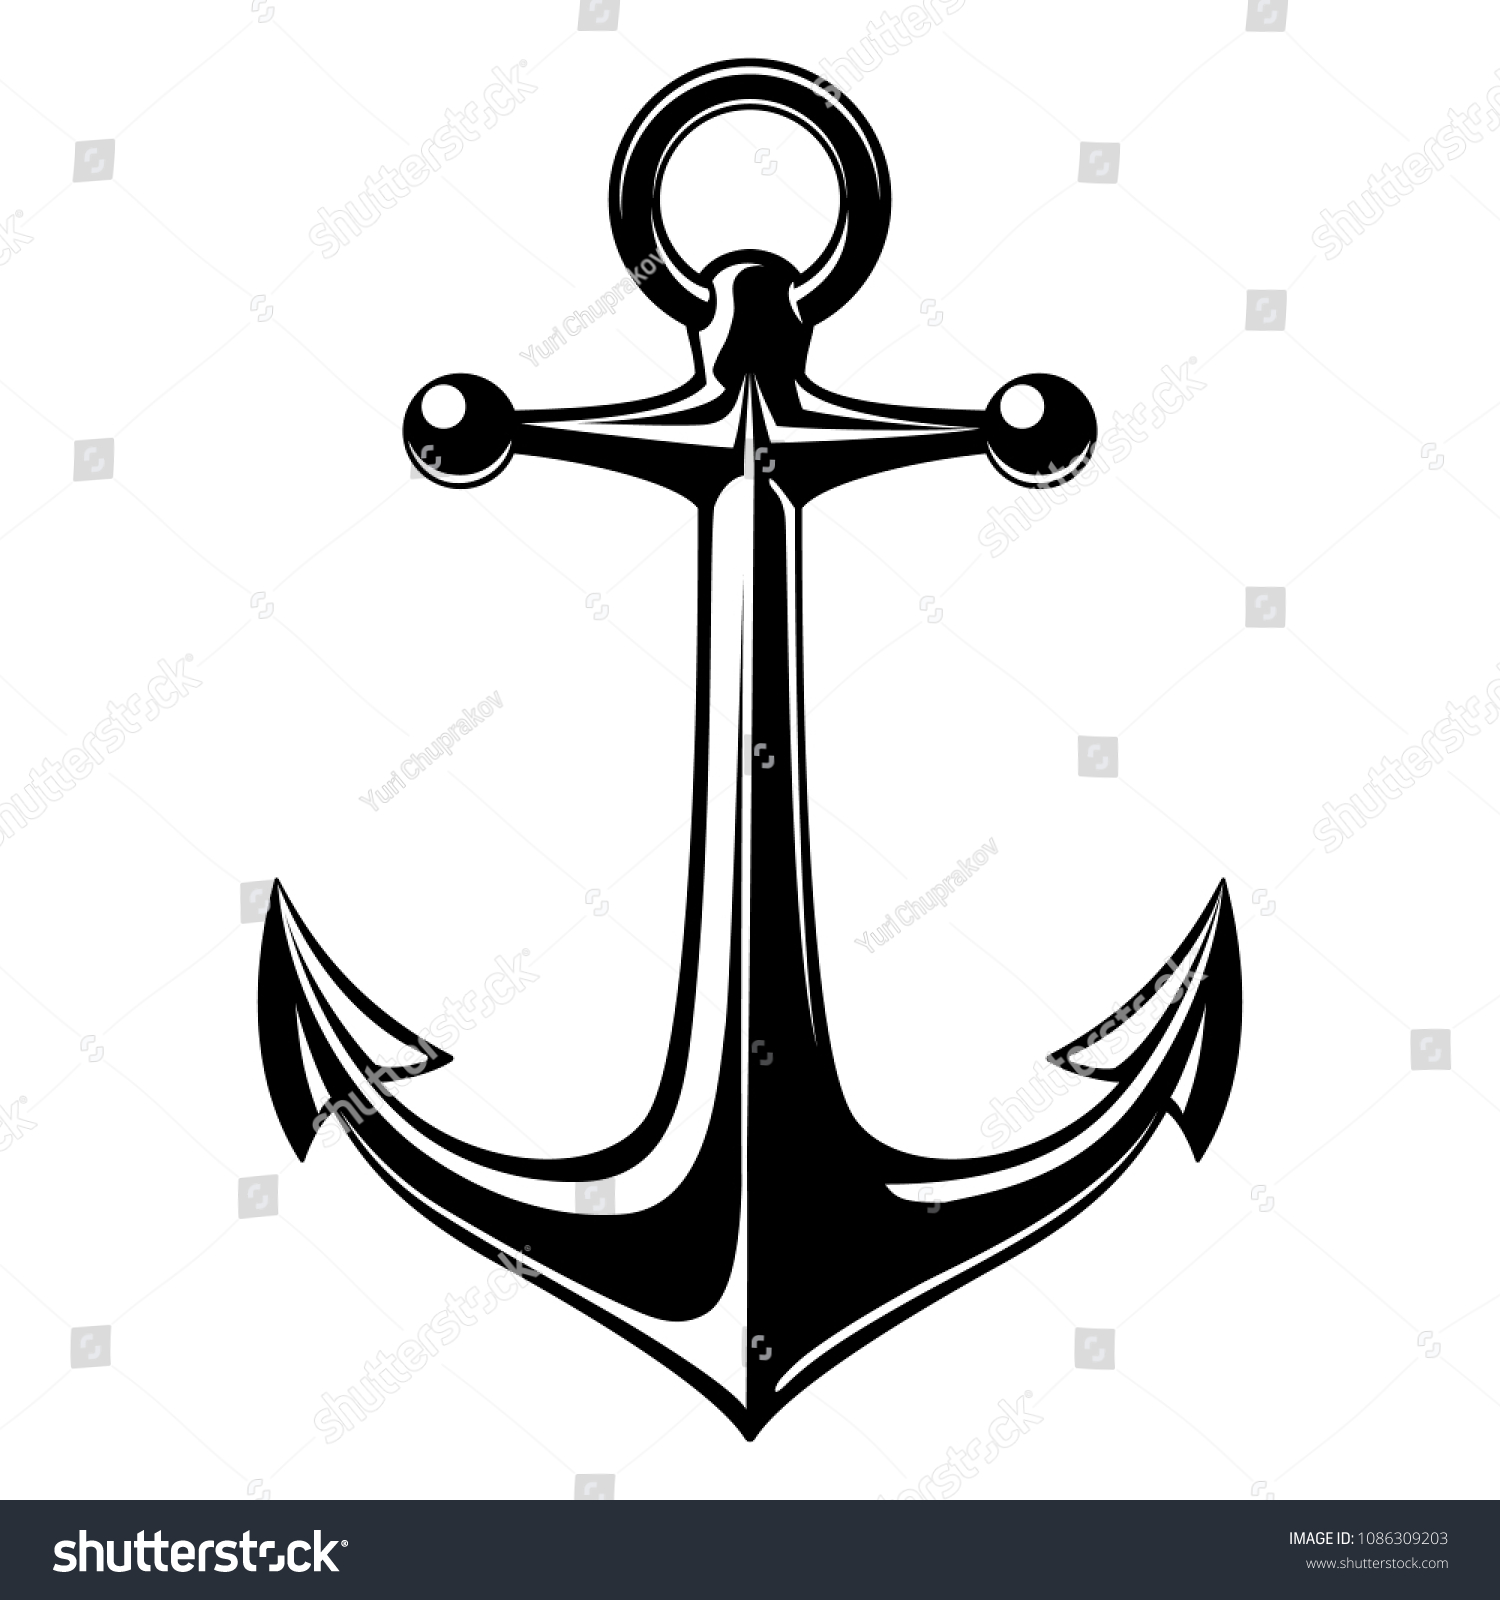 SVG of Vector illustration, monochrome sea anchor icon isolated on white background. Simple shape for design logo, emblem, symbol, sign, badge, label, stamp. svg